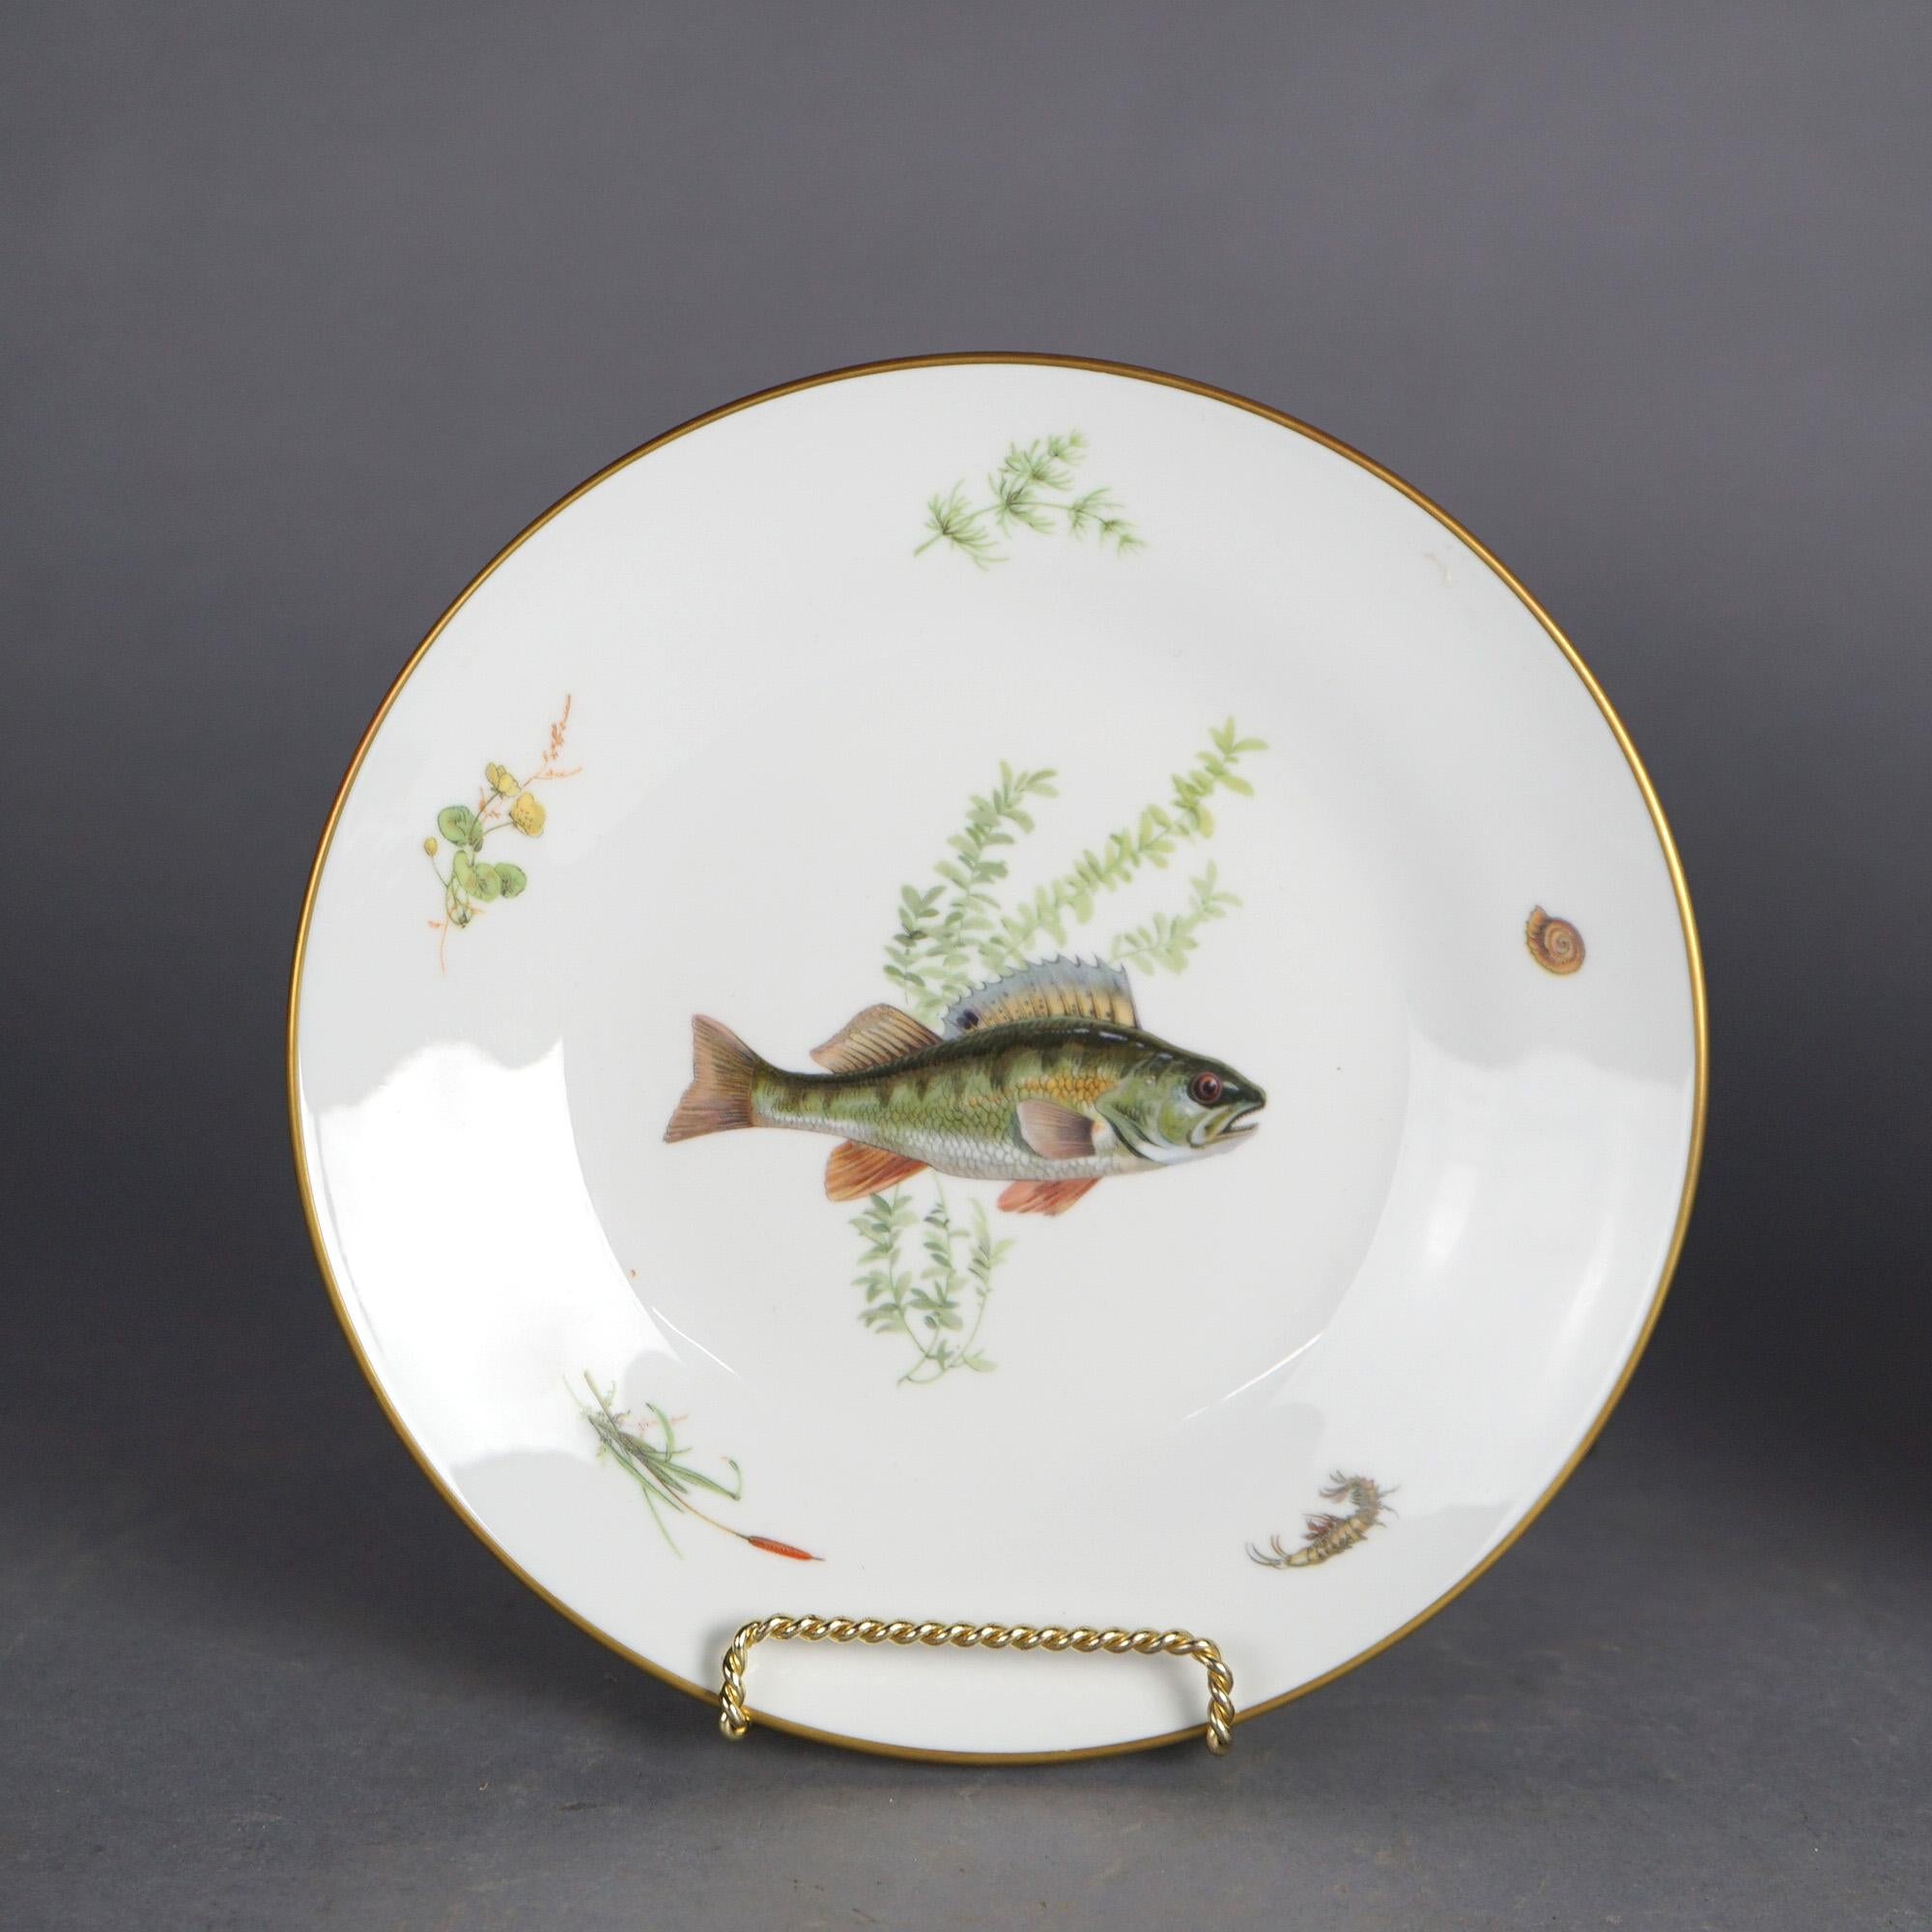 Antique Set of Four Italian Ginori Hand Painted Porcelain Fish Plates, C1930
No label

Measures- 1.5''H x 9.75''W x 9.75''D